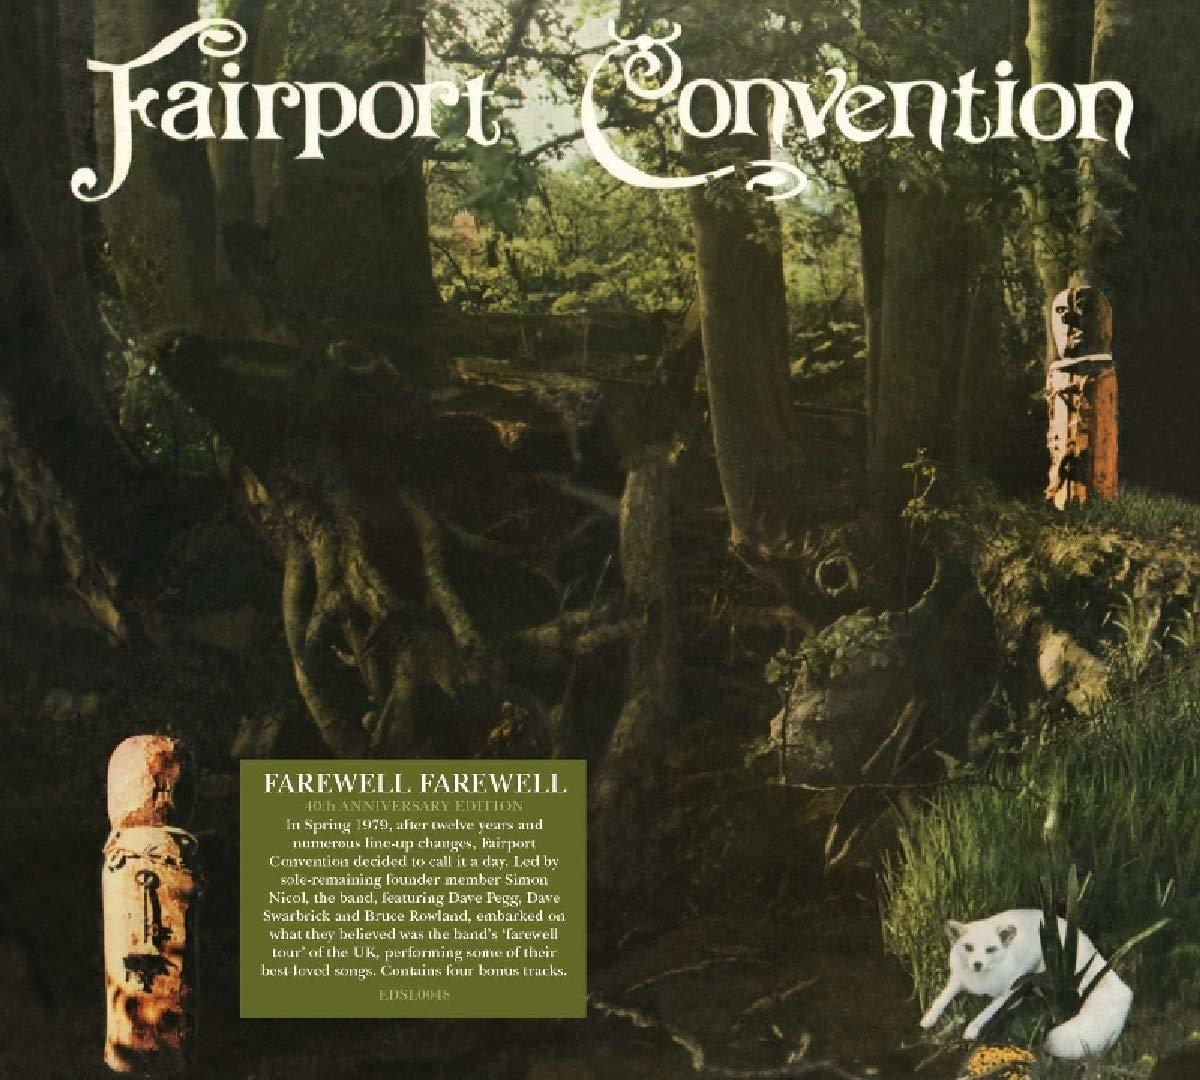 Farewell (Vinyl) - - Convention Farewell Fairport